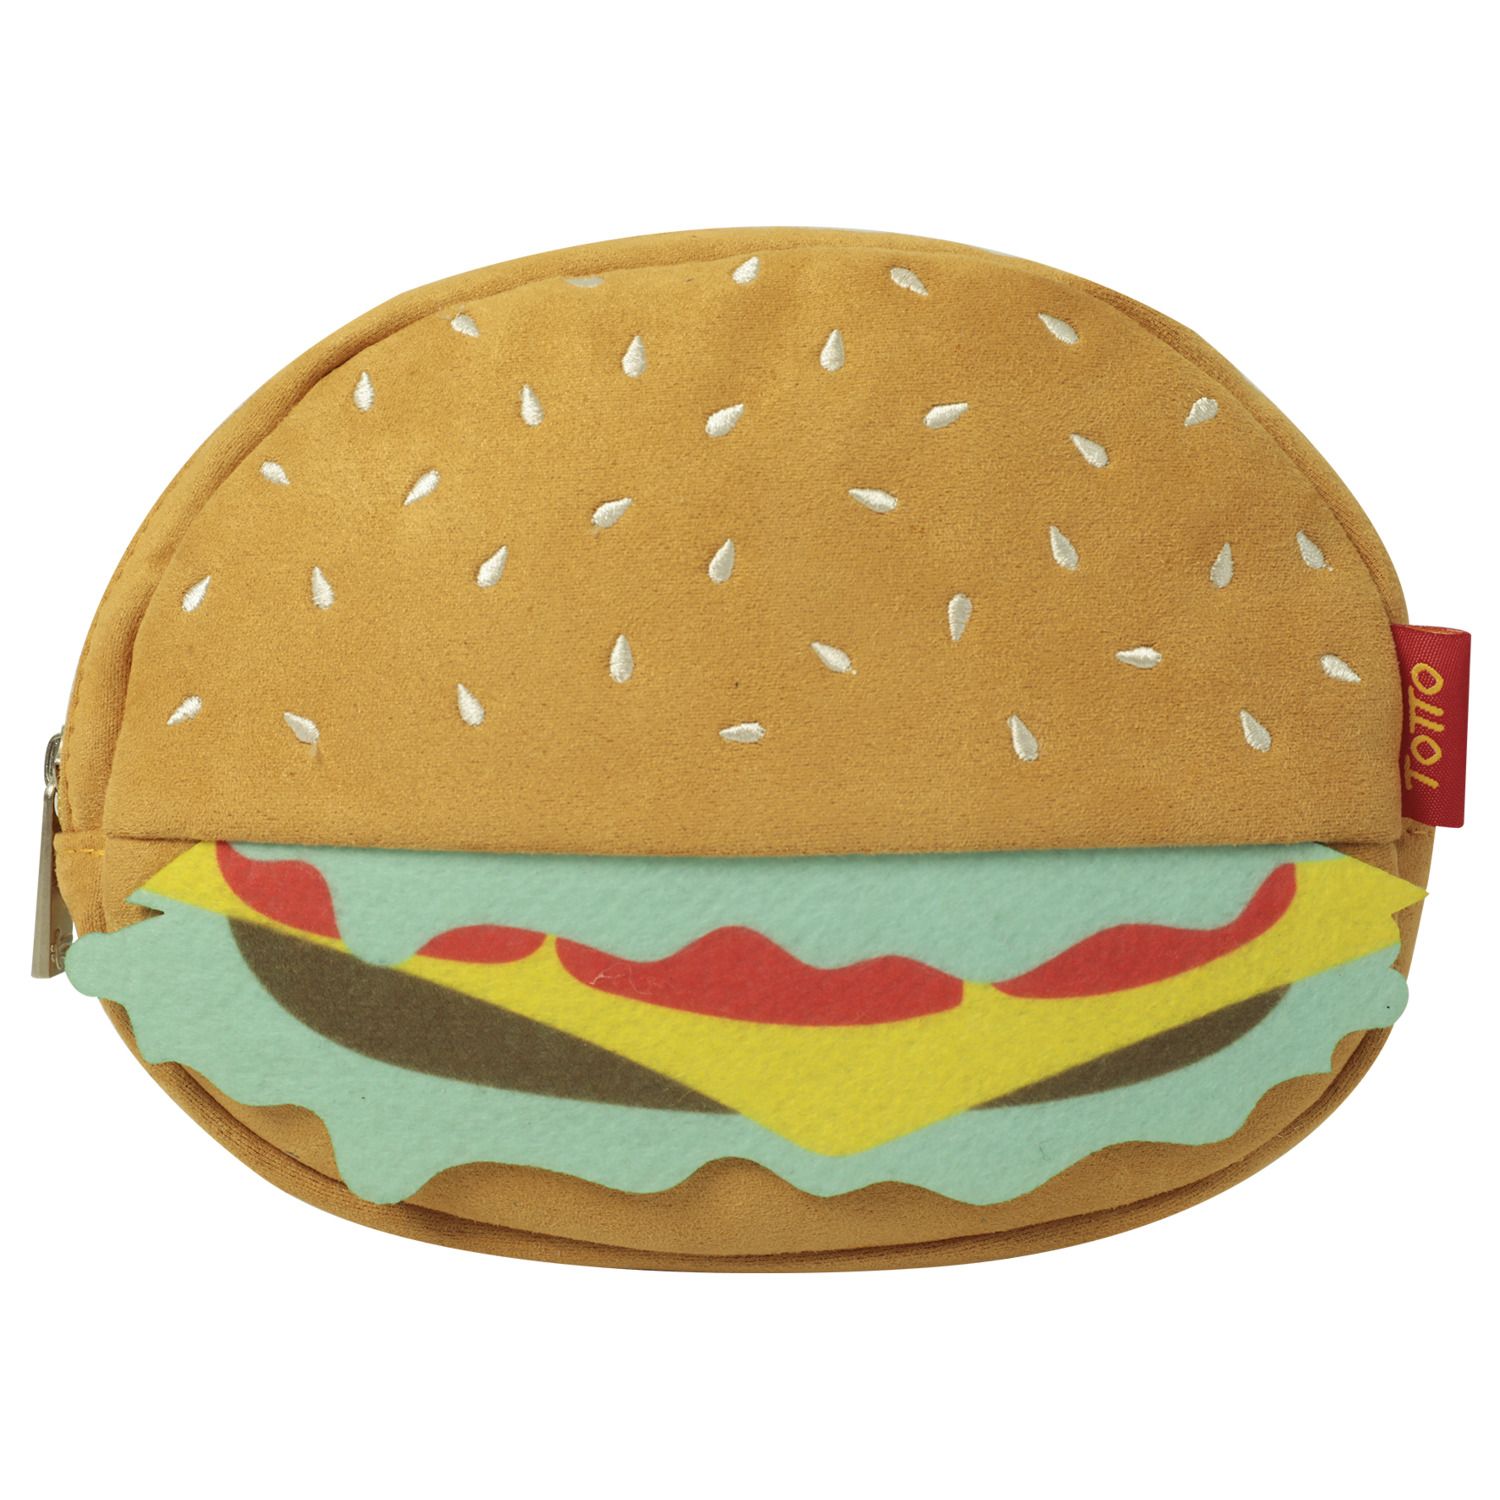 Estuche escolar hamburguesa - Comira